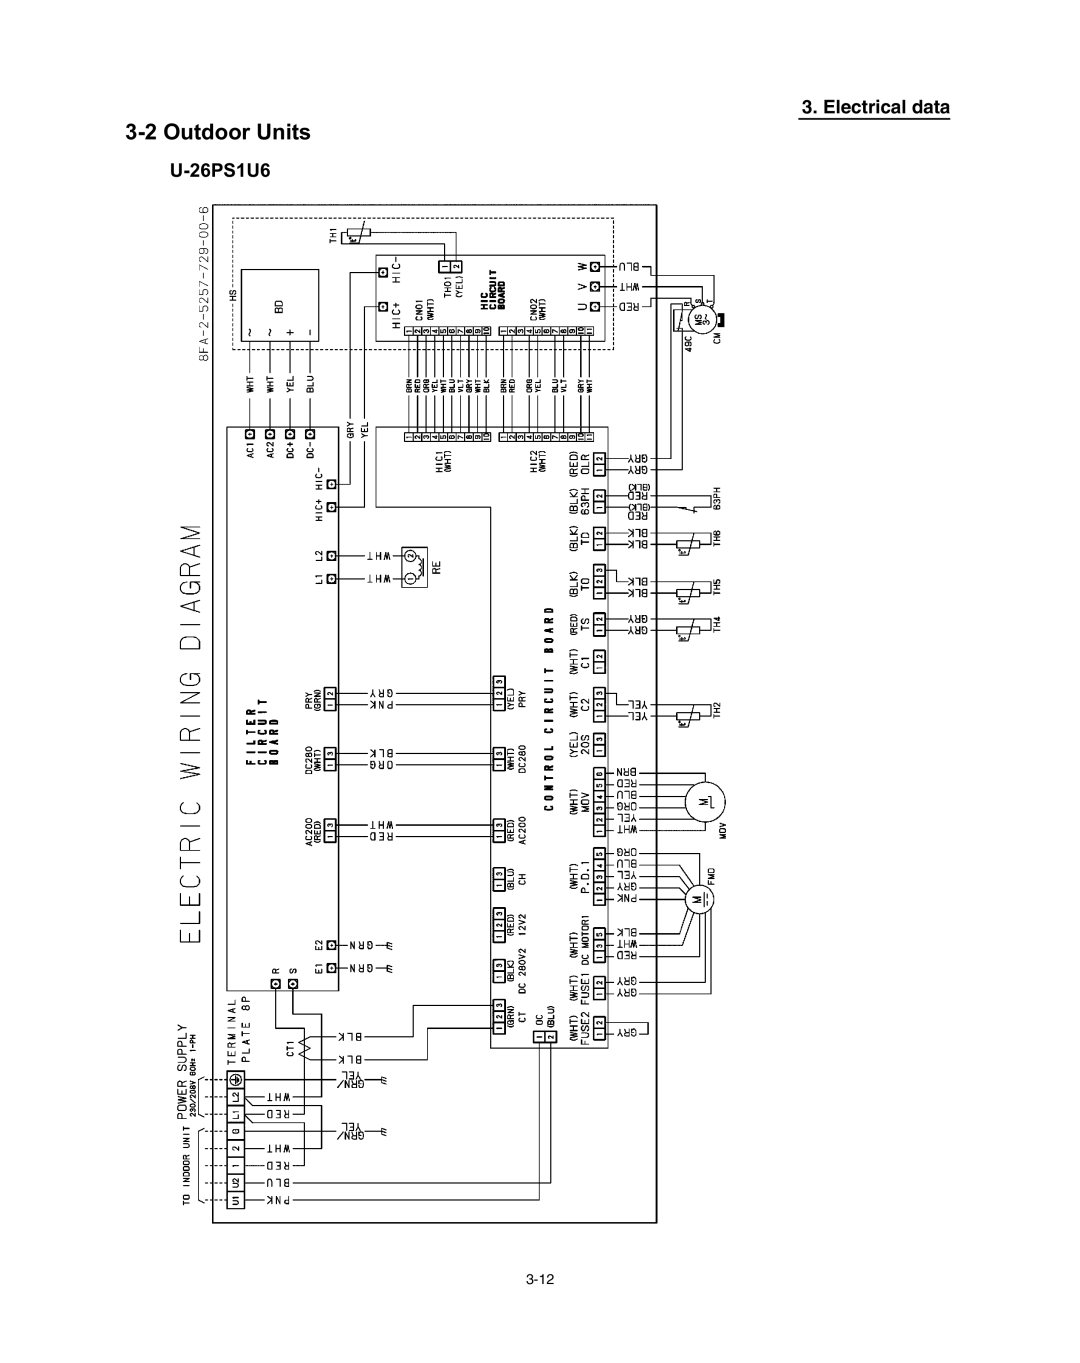 Panasonic R410A service manual 3-2Outdoor Units, Electrical data, U-26PS1U6 